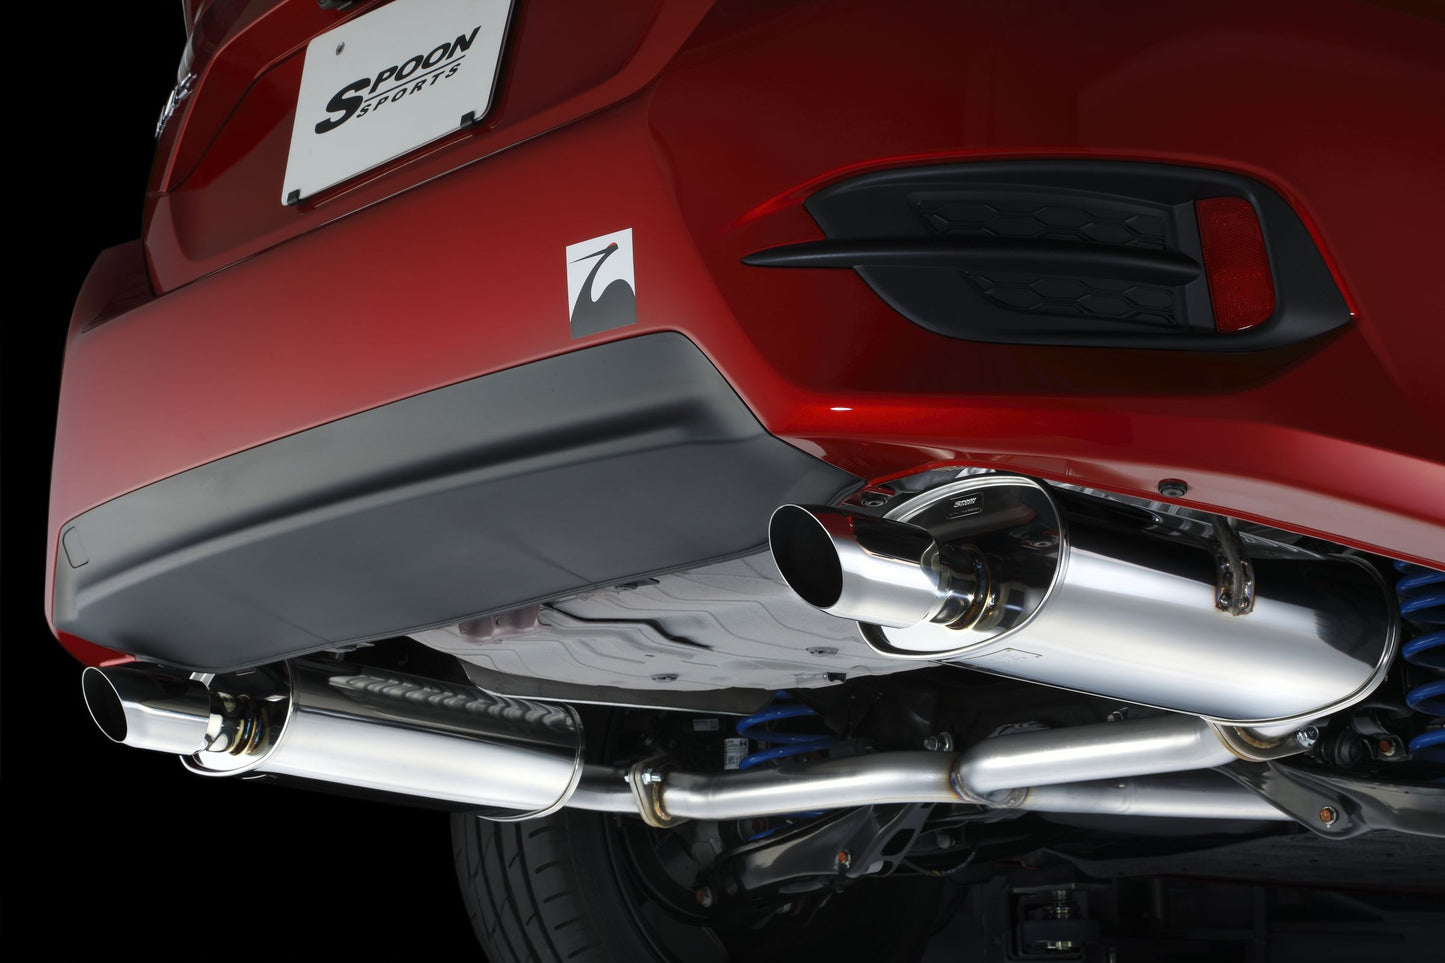 Spoon N1 Muffler Exhaust Kit 2016-2021 Honda Civic FC1